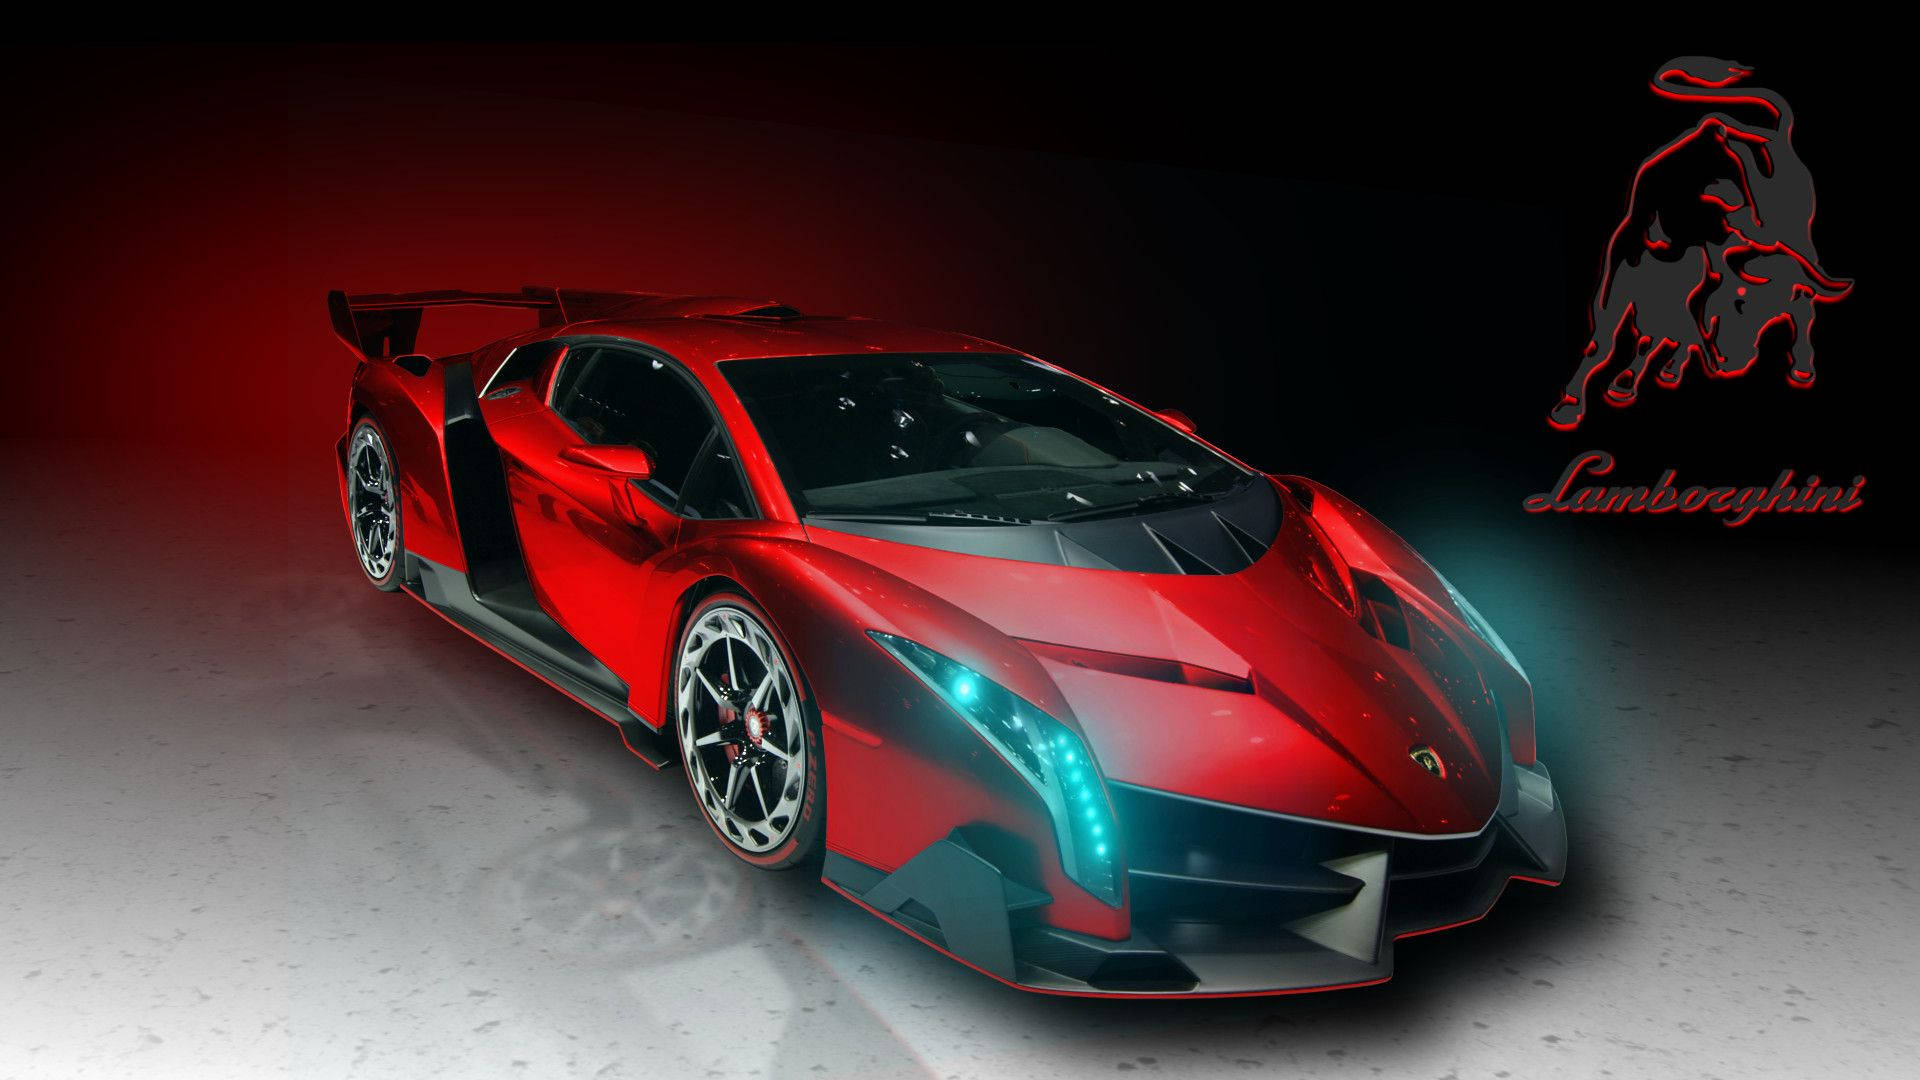 Cool Cars: Red Lamborghini Picture